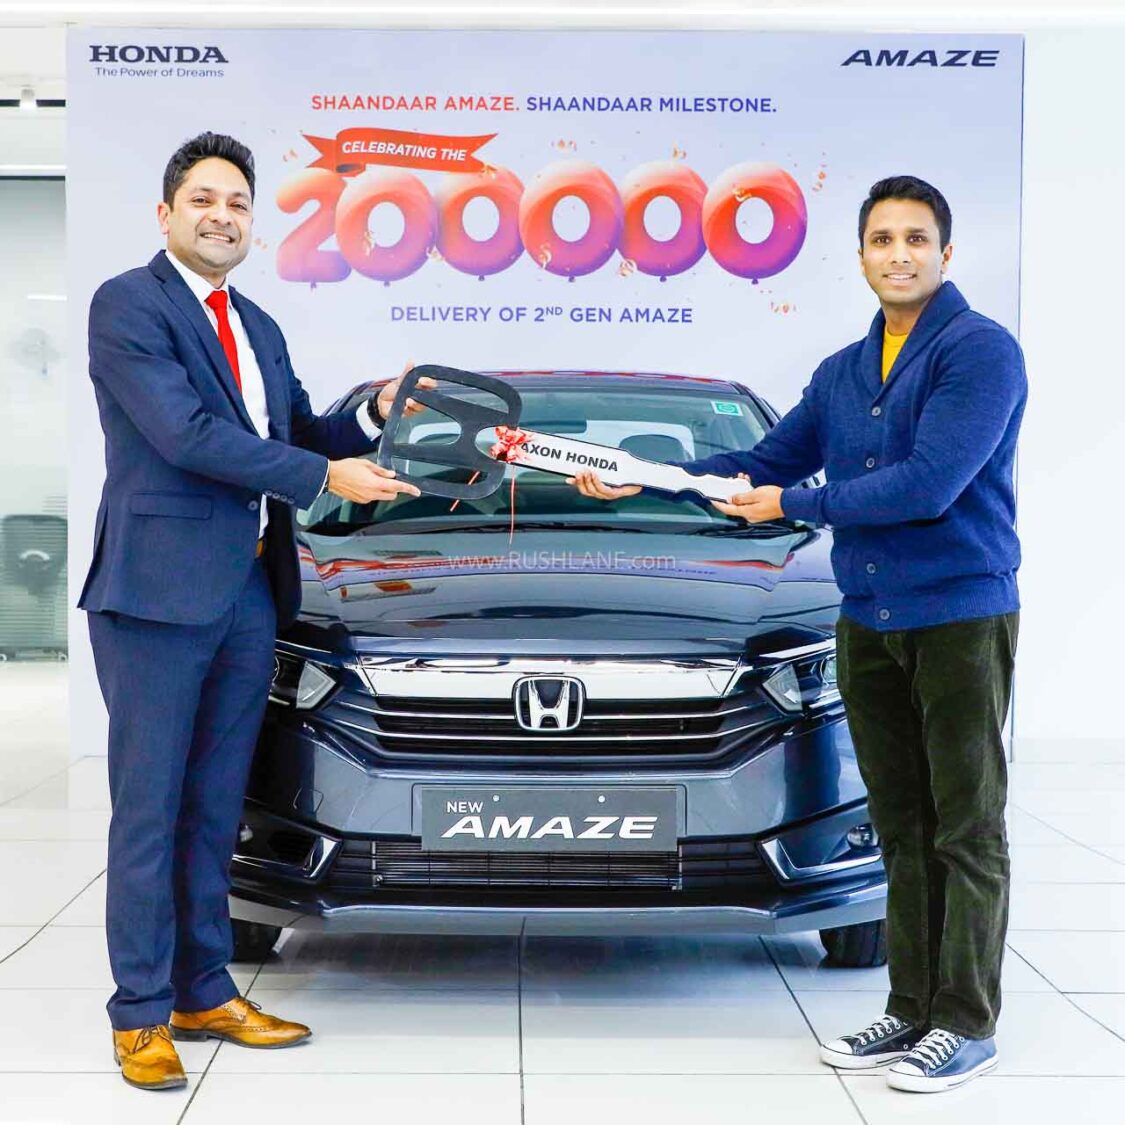 New Gen Honda Amaze customer no 2 lakh, takes delivery